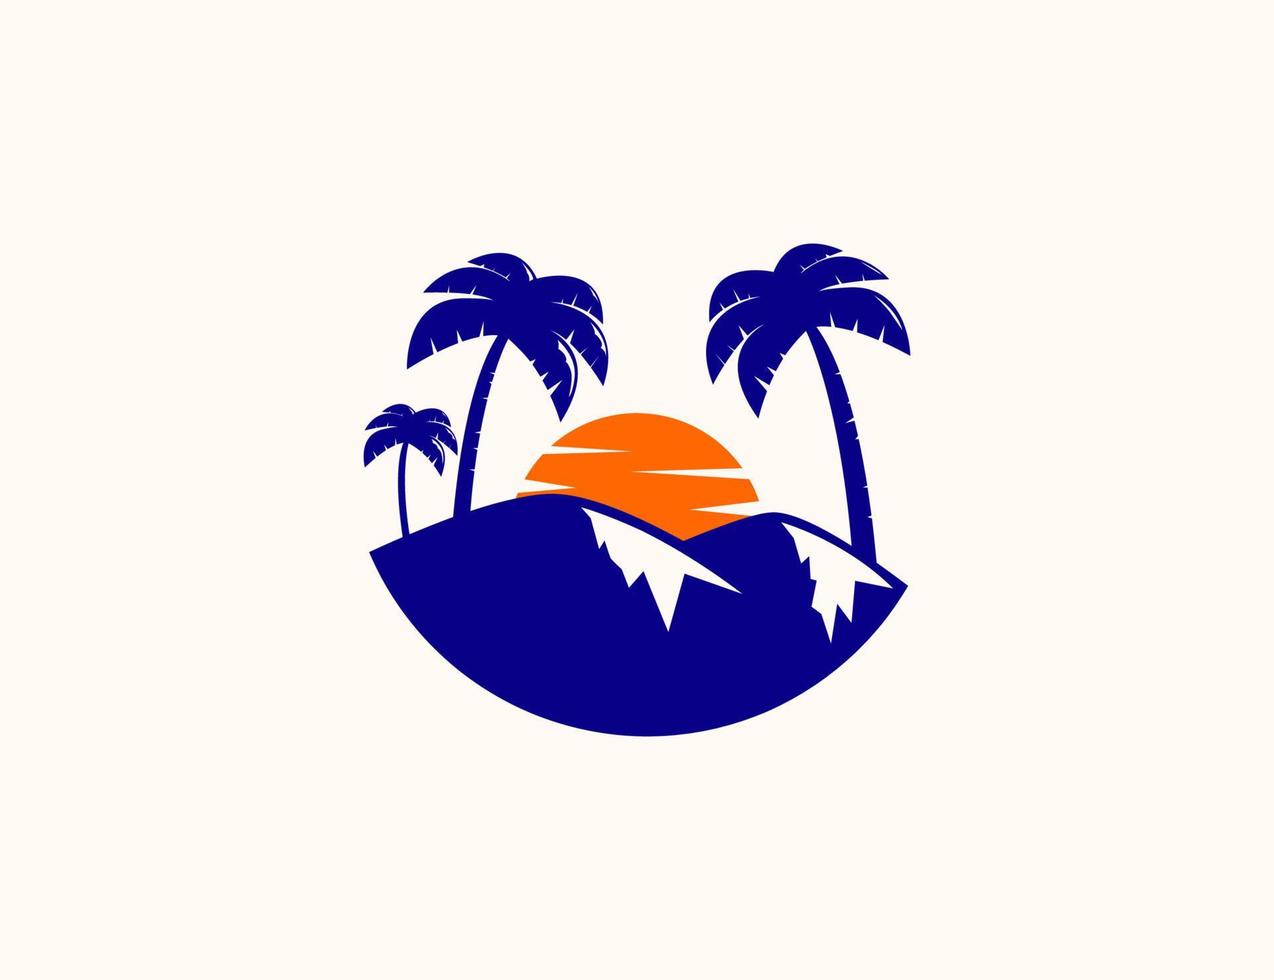 Sunset mountain and palm tree illustration logo design vector